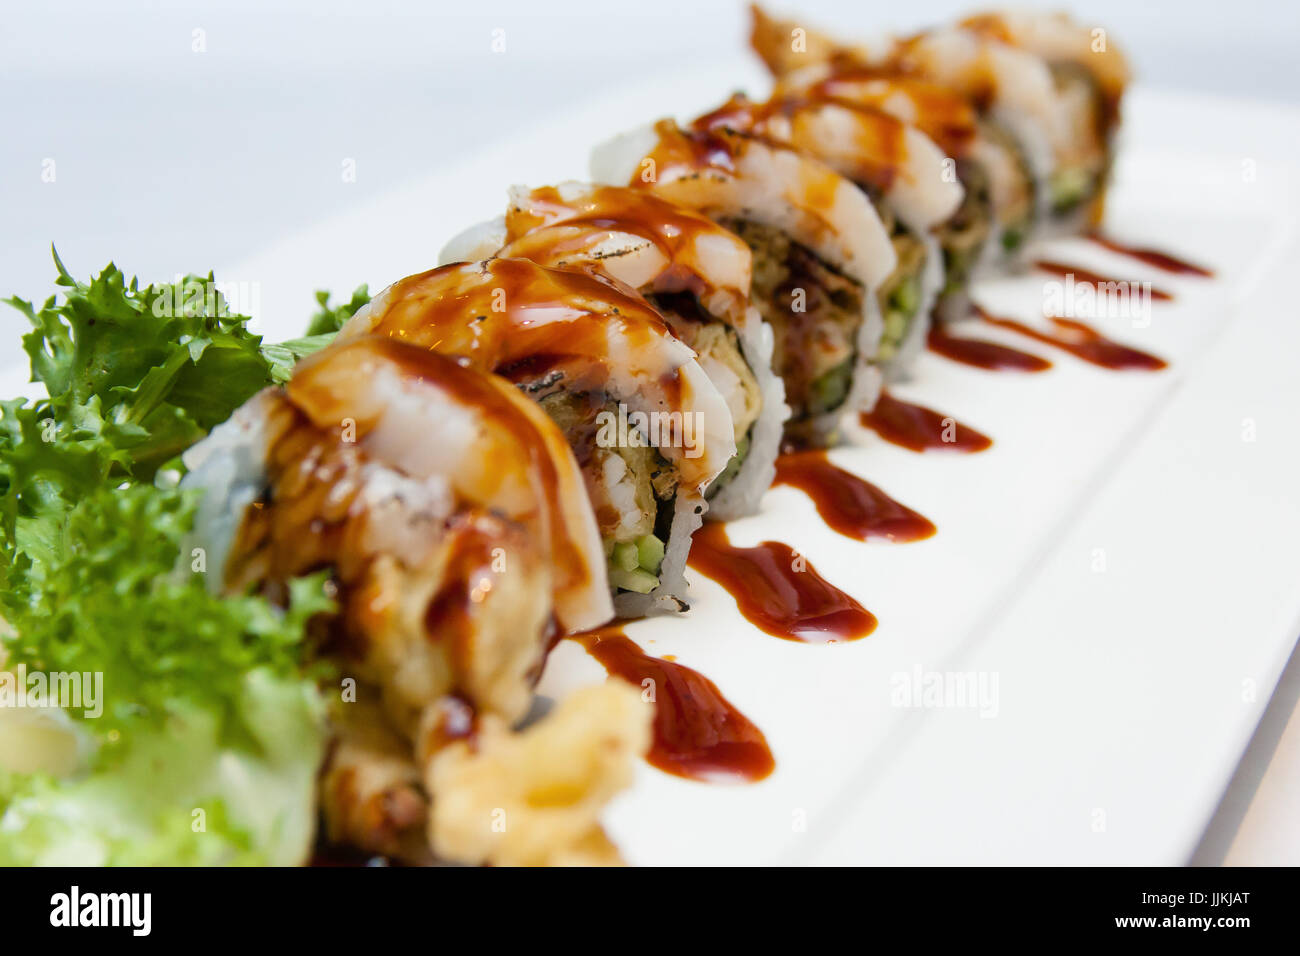 https://c8.alamy.com/comp/JJKJAT/sushi-roll-with-scallop-and-eel-sauce-JJKJAT.jpg